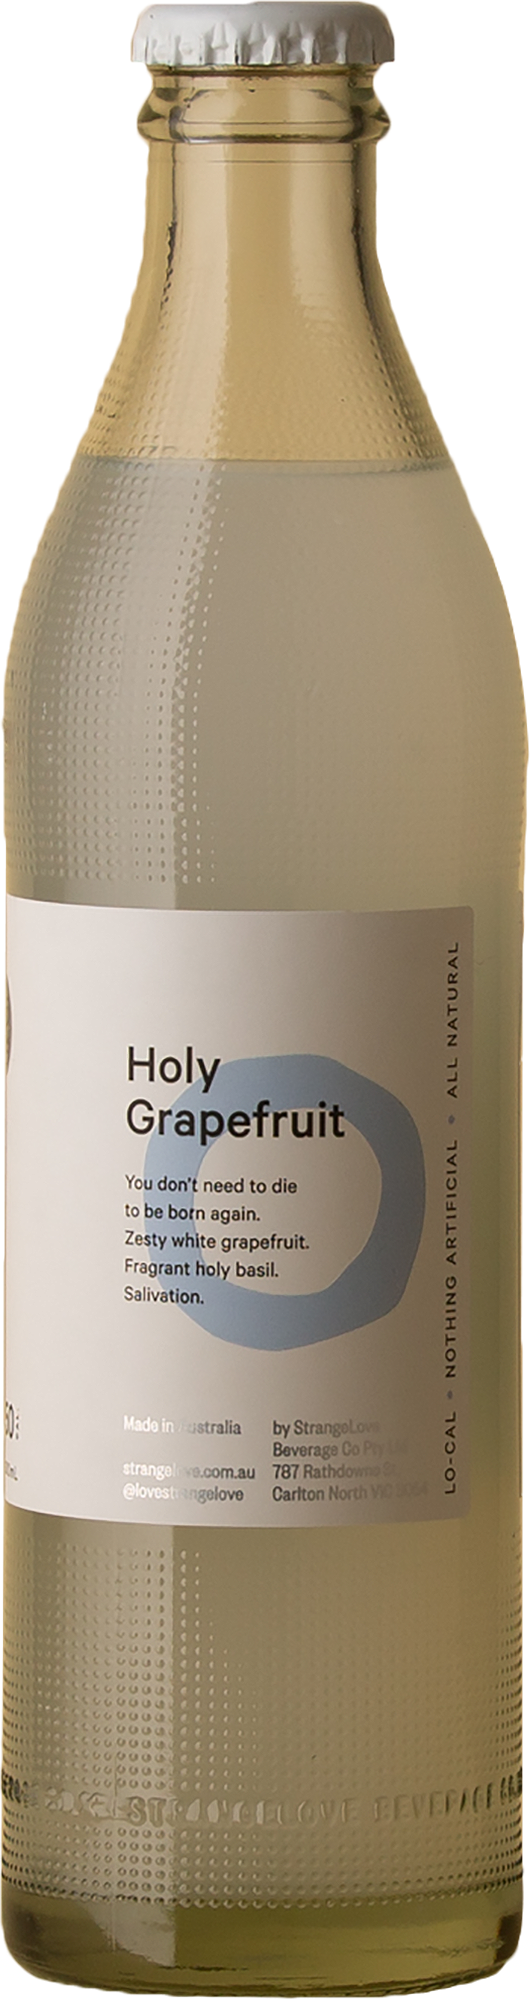 StrangeLove - Holy Grapefruit Non-Alc